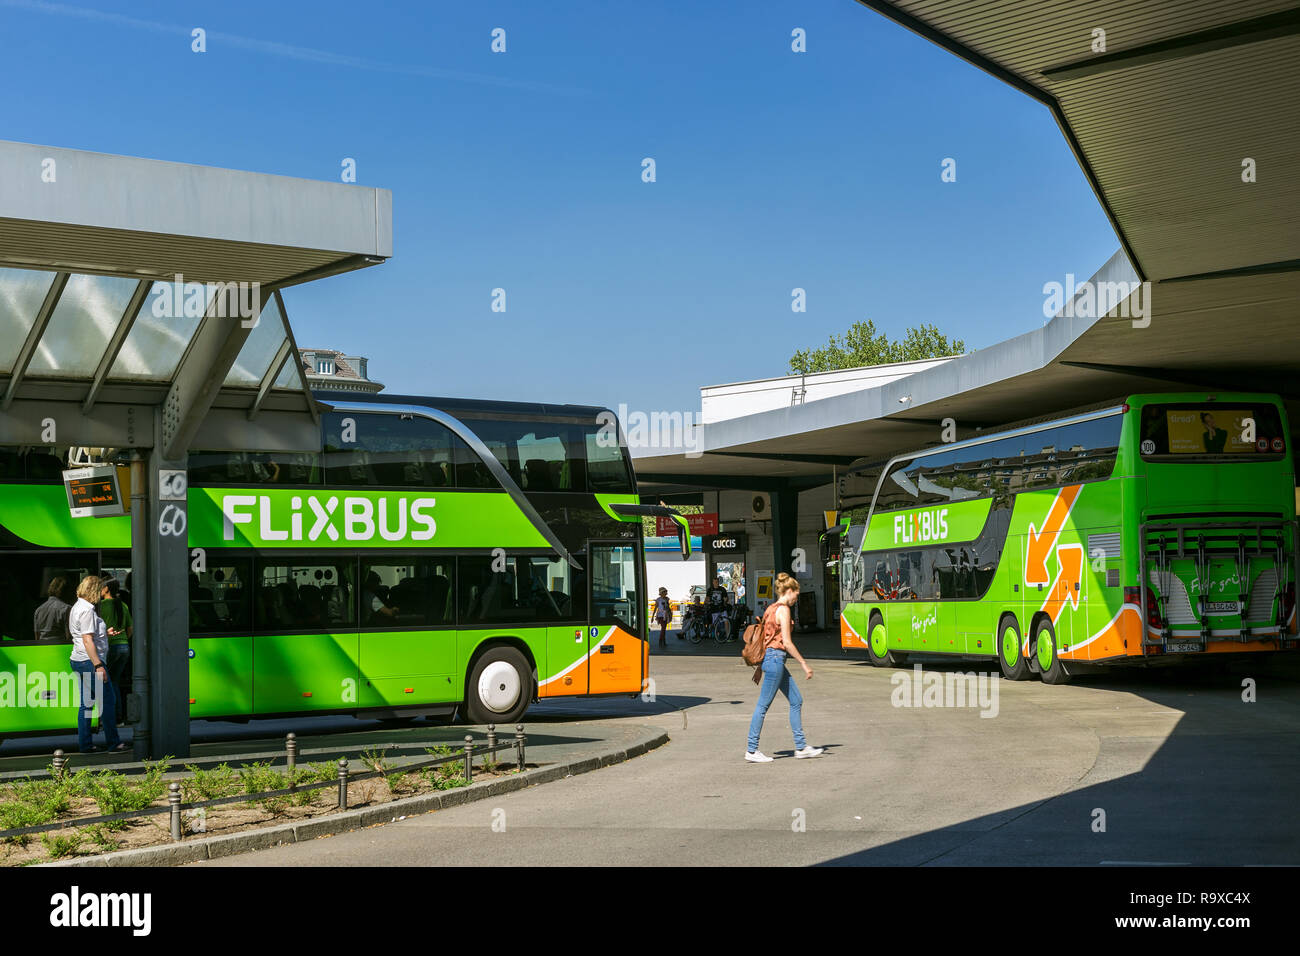 08.05.2018, Berlino, Deutschland - Busse des Fernbusunternehmens Flixbus am Zentralen Omnibusbahnhof Berlino. 0MC180508D423CARO [modello di rilascio: NO, PROP Foto Stock